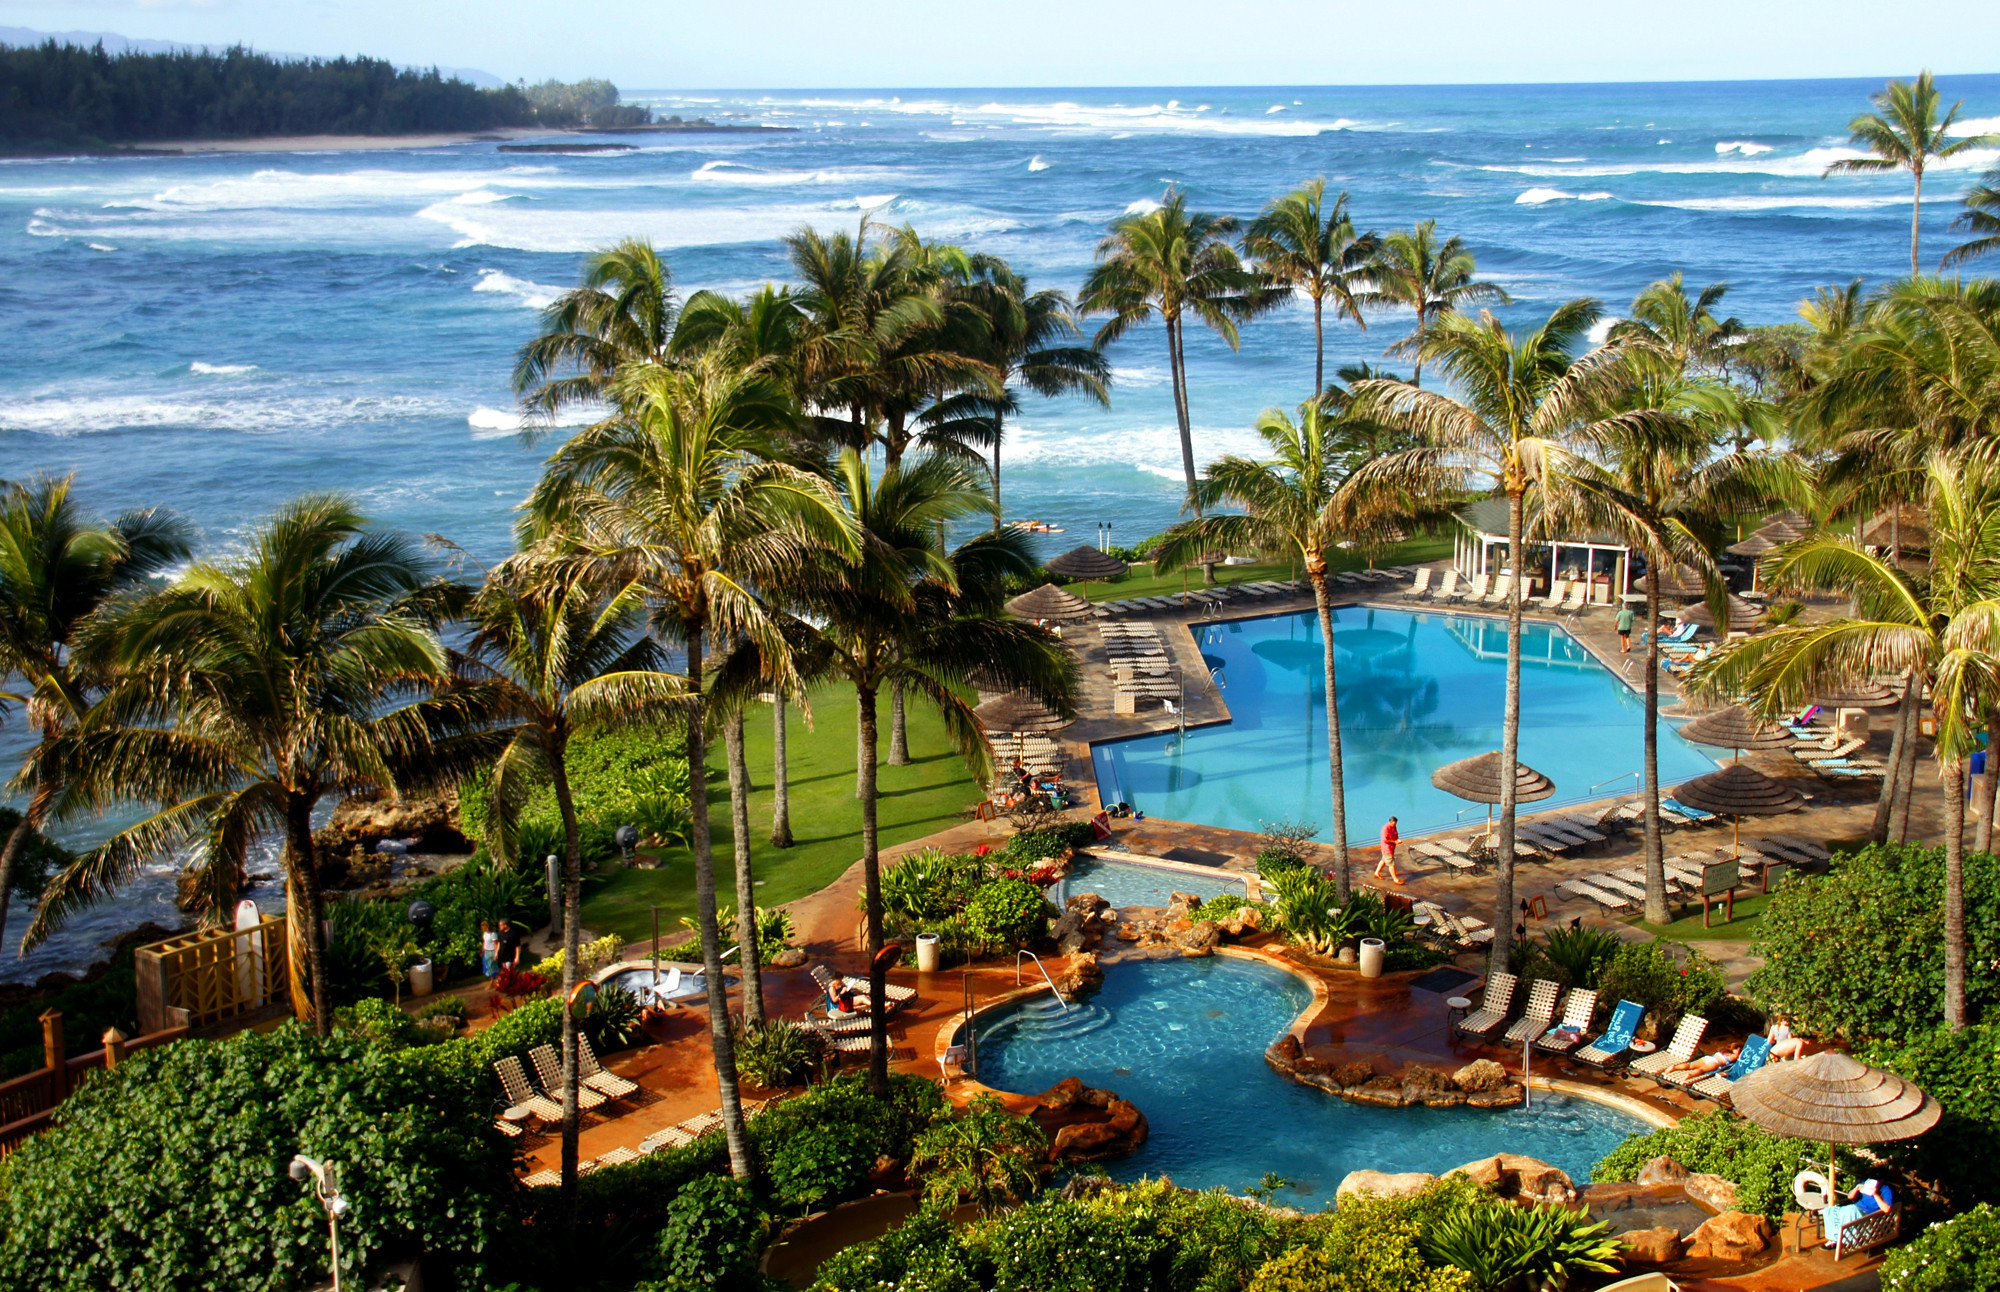 HAWAII, OAHU:  Turtle Bay Resort pools viewed from the 5th floor of the resort.